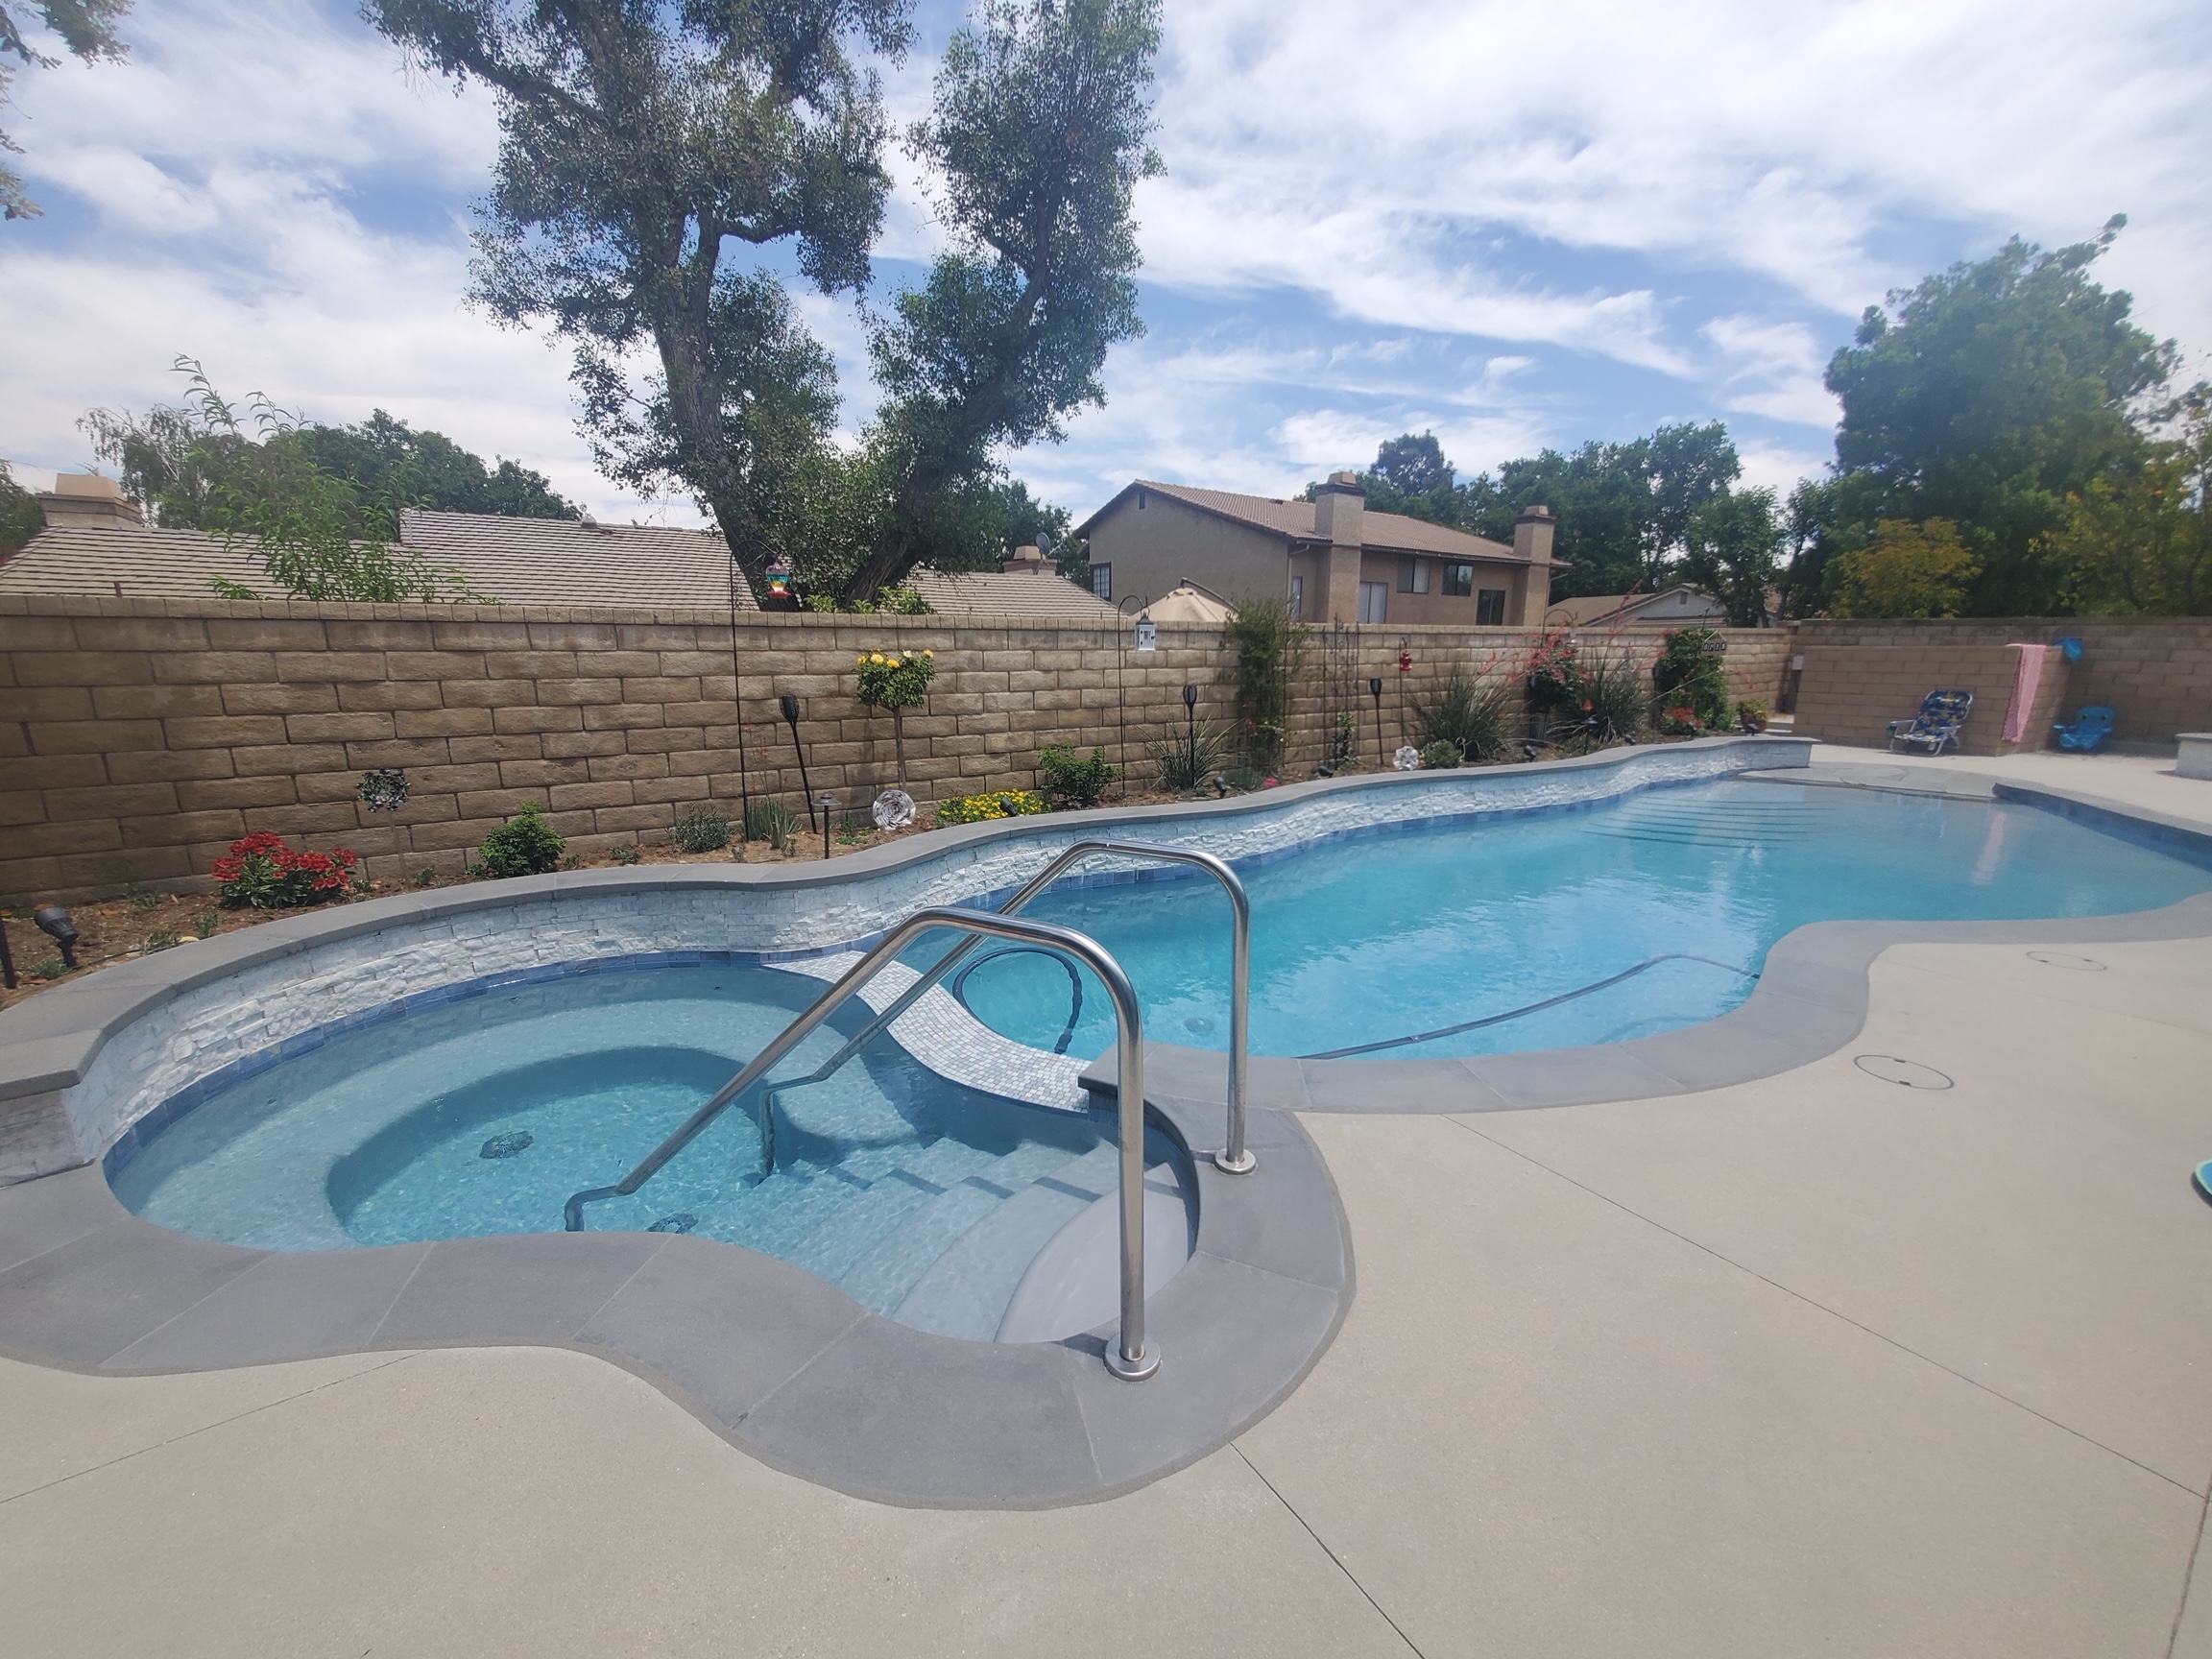 Freeform custom pool and spa with stone edge